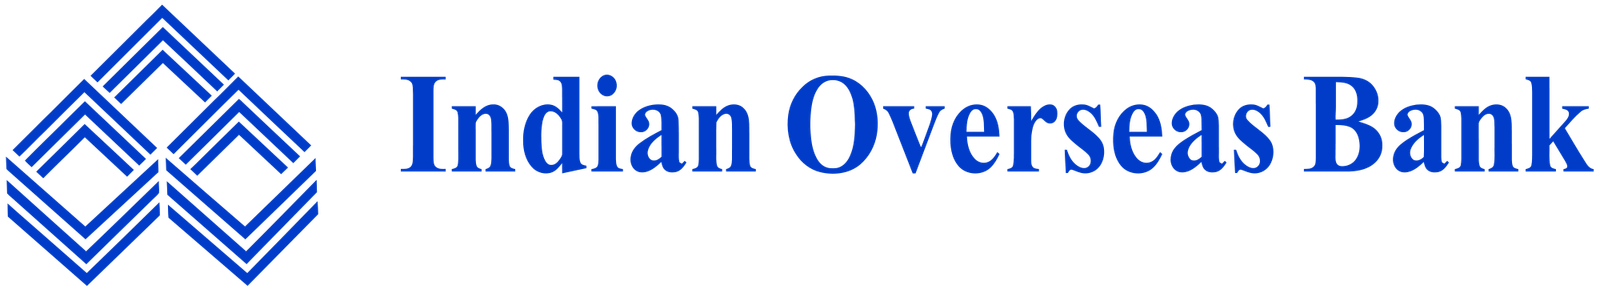 Indian Overseas Bank Logo